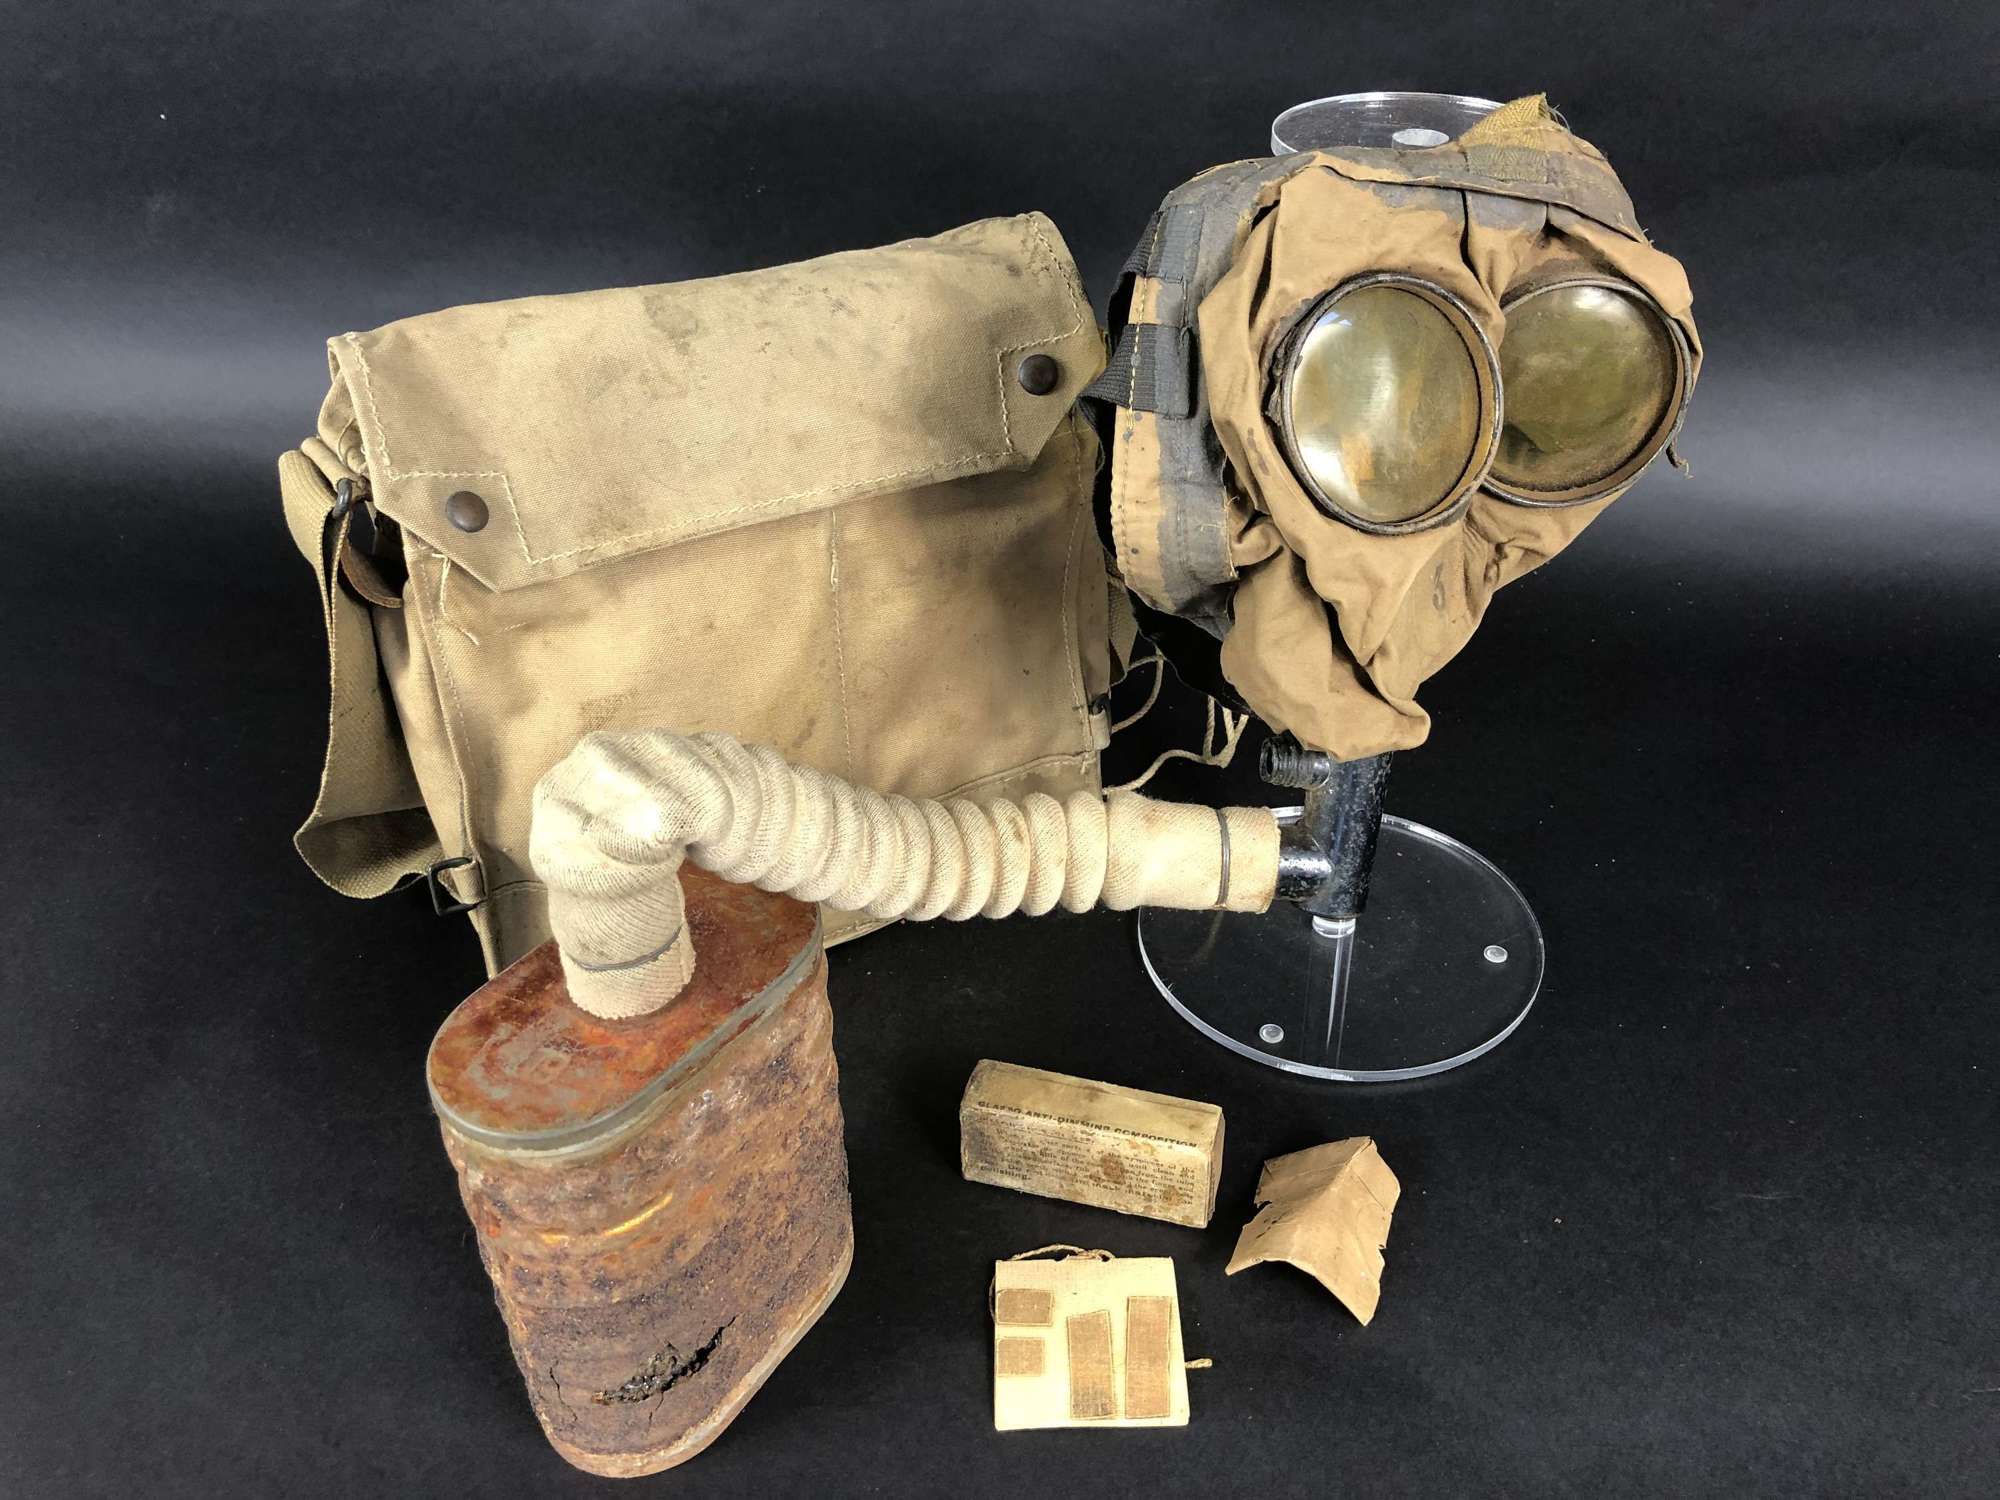 WW1 British “Small Box Respirator